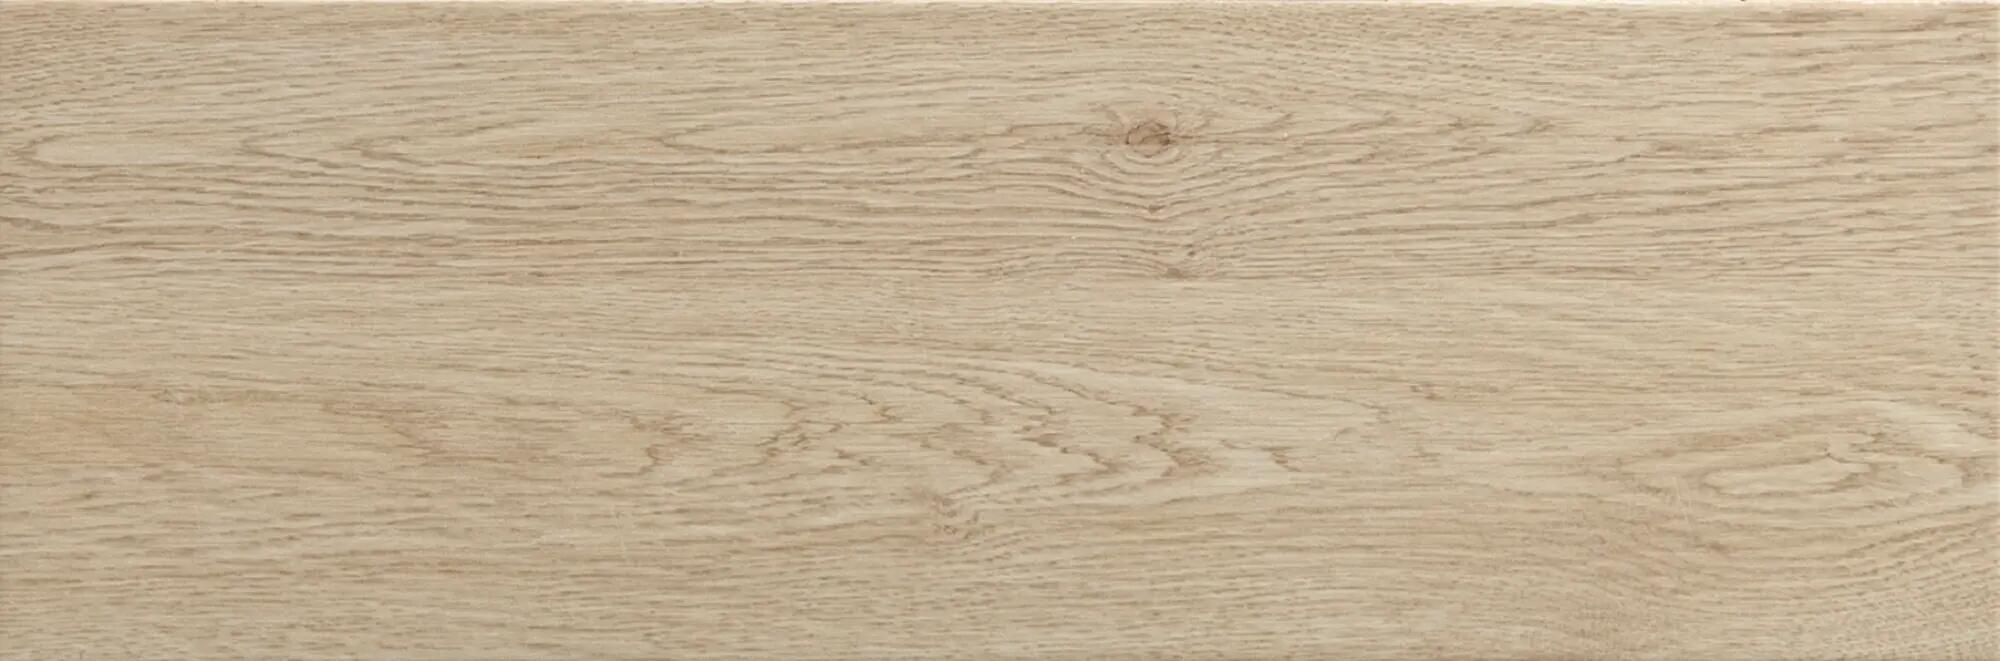 Suelo cerámico caoba efecto madera gris 20.5x61.5 cm c1